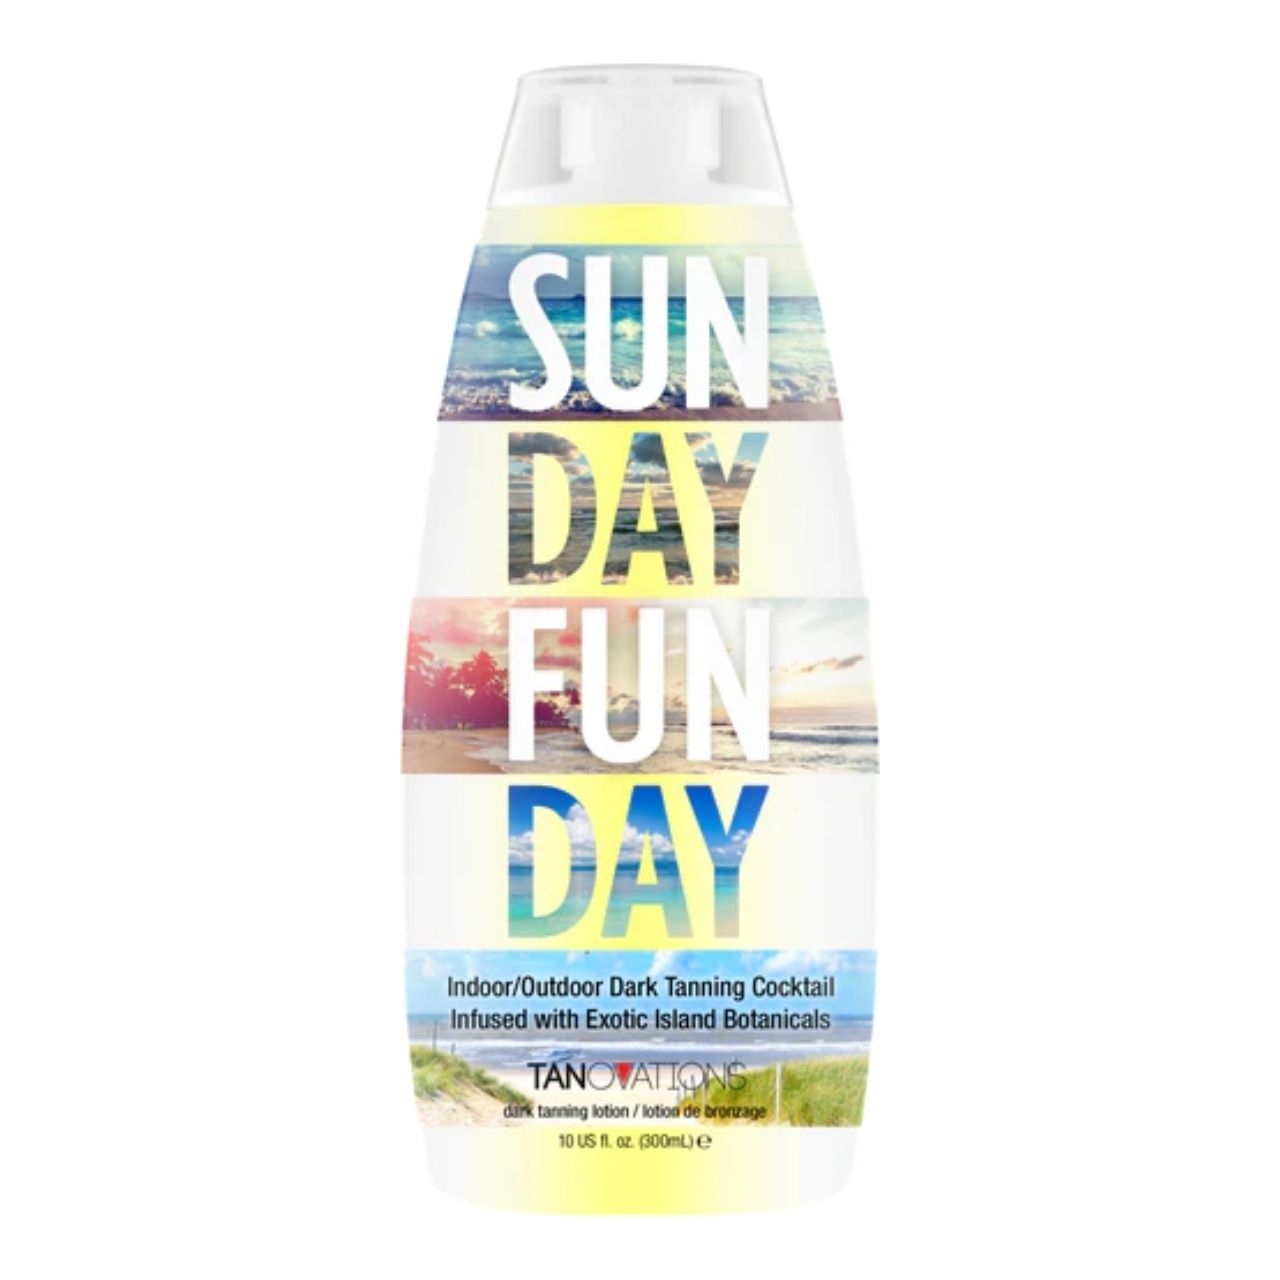 Tanovations Sun Day Fun Day Bottle